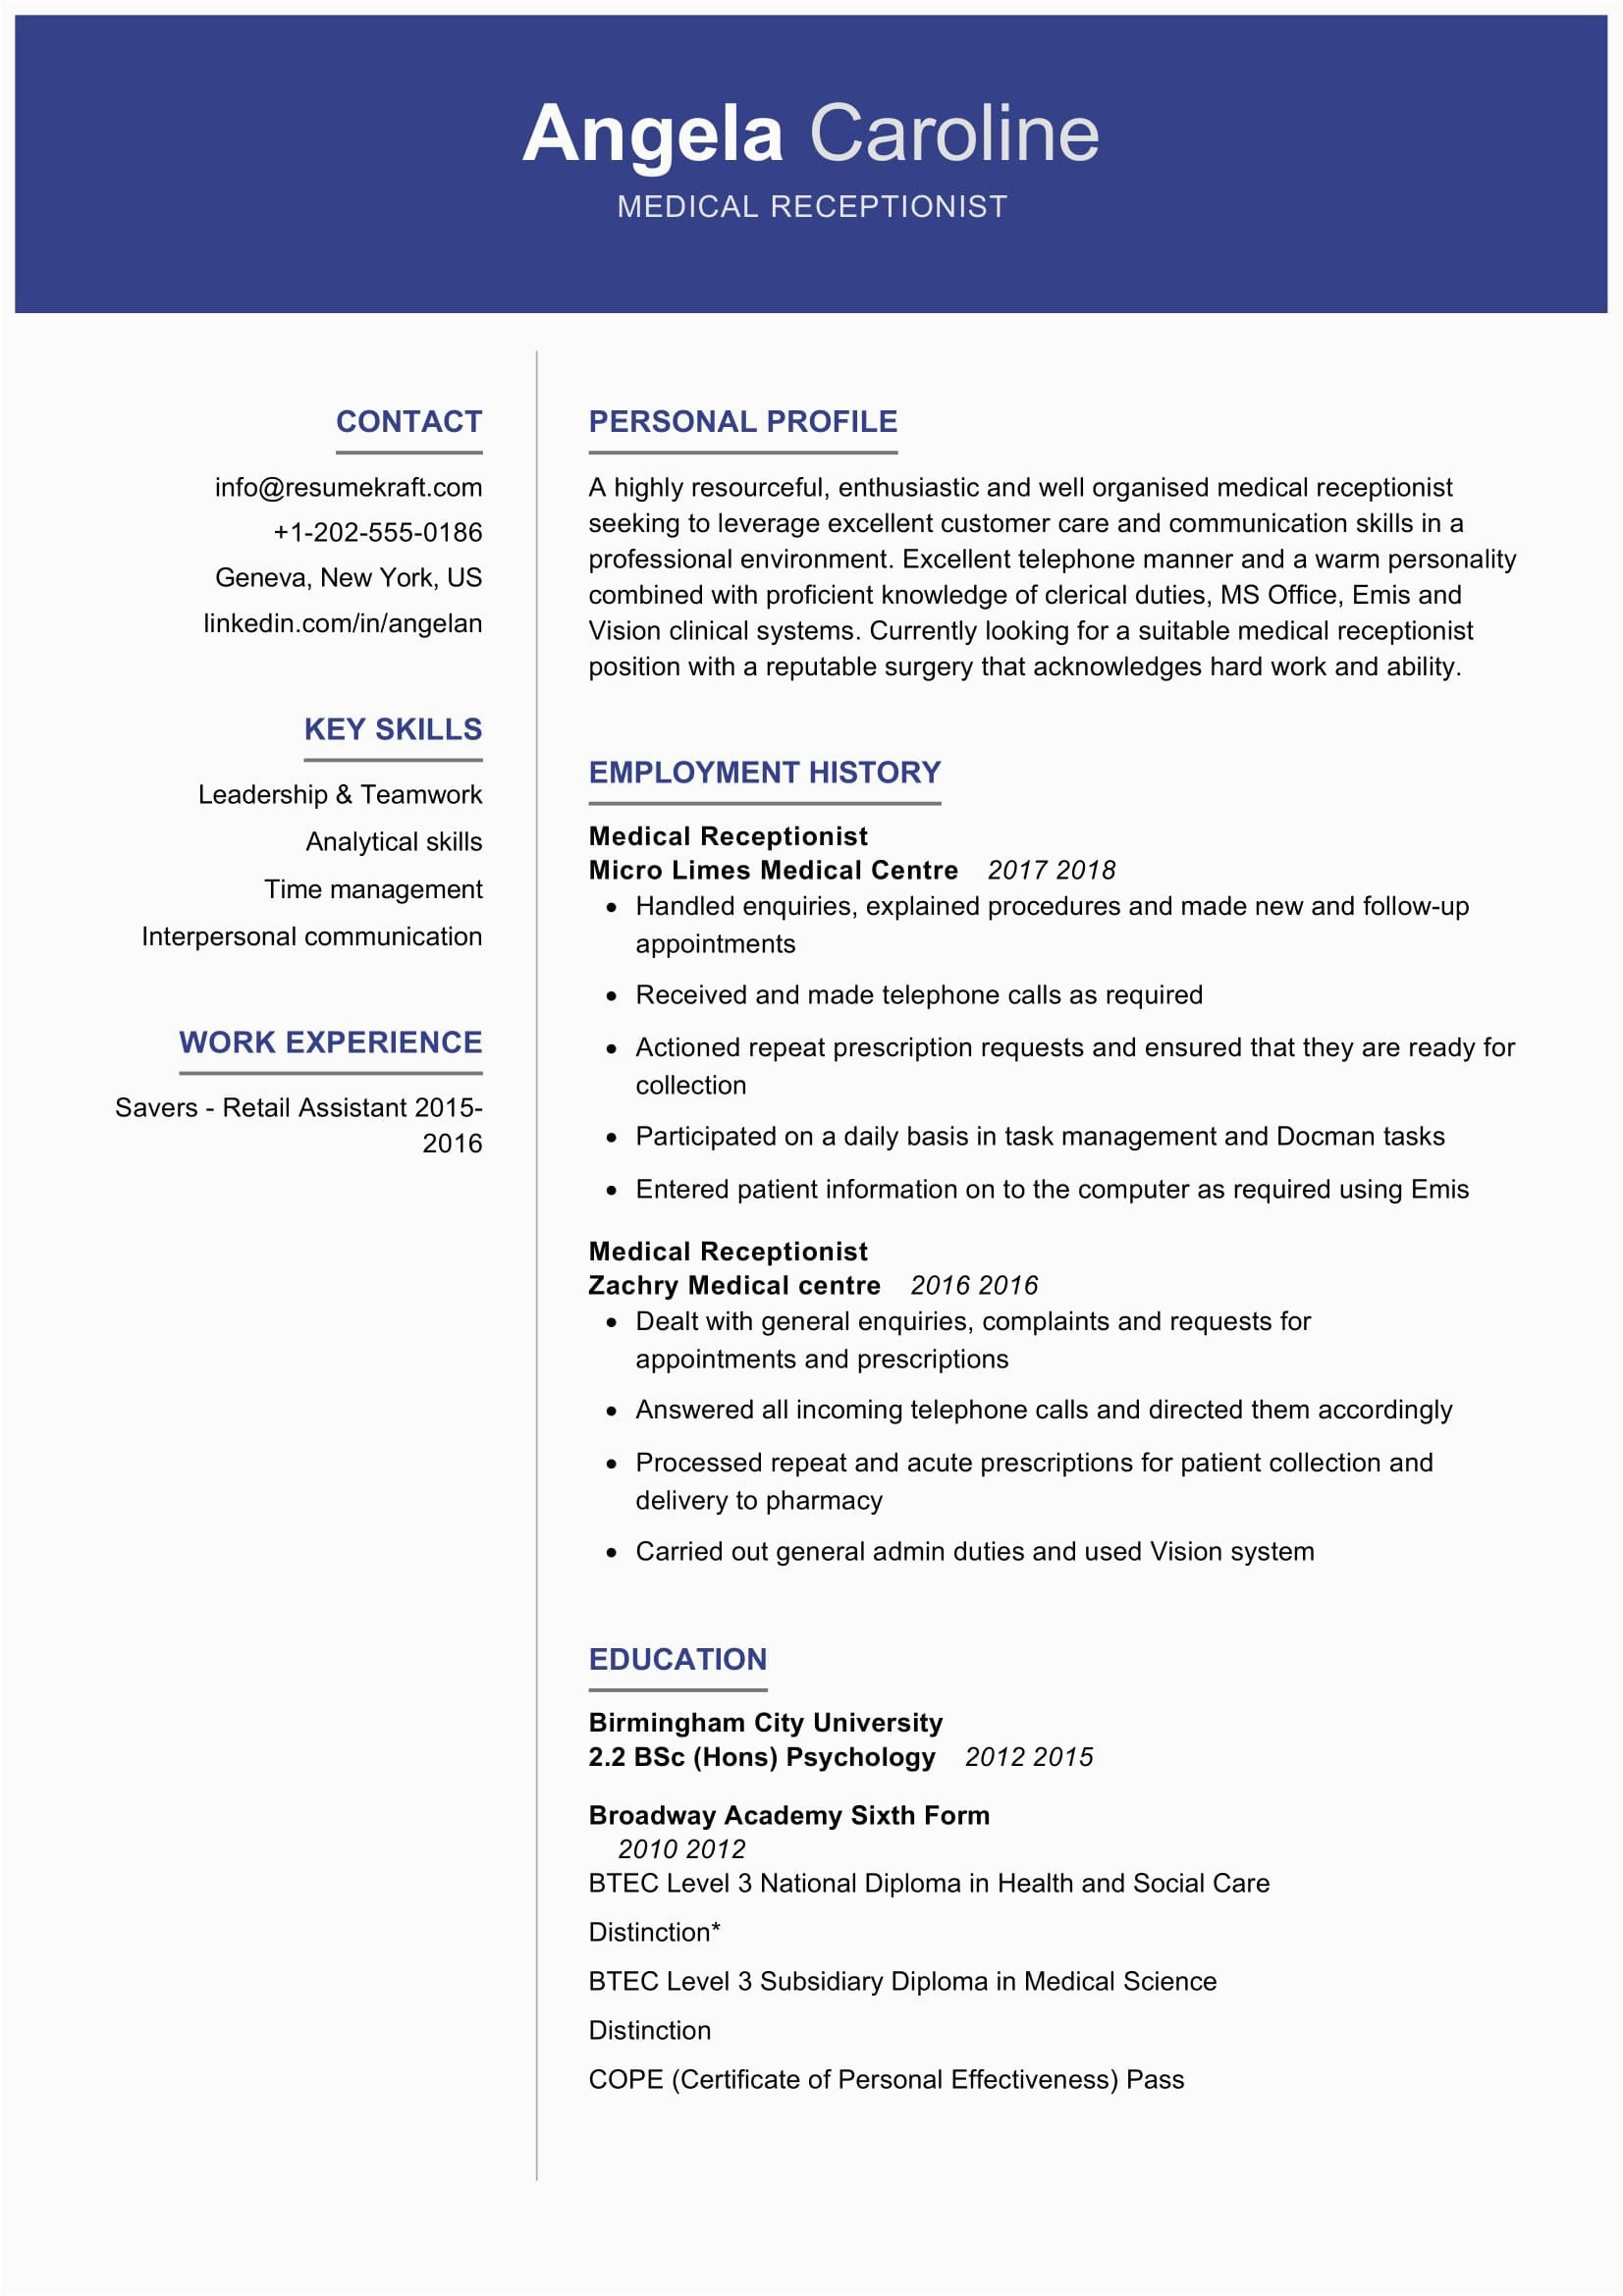 Resume Sample for Medical Office Receptionist Medical Receptionist Resume Sample 2021 Resumekraft